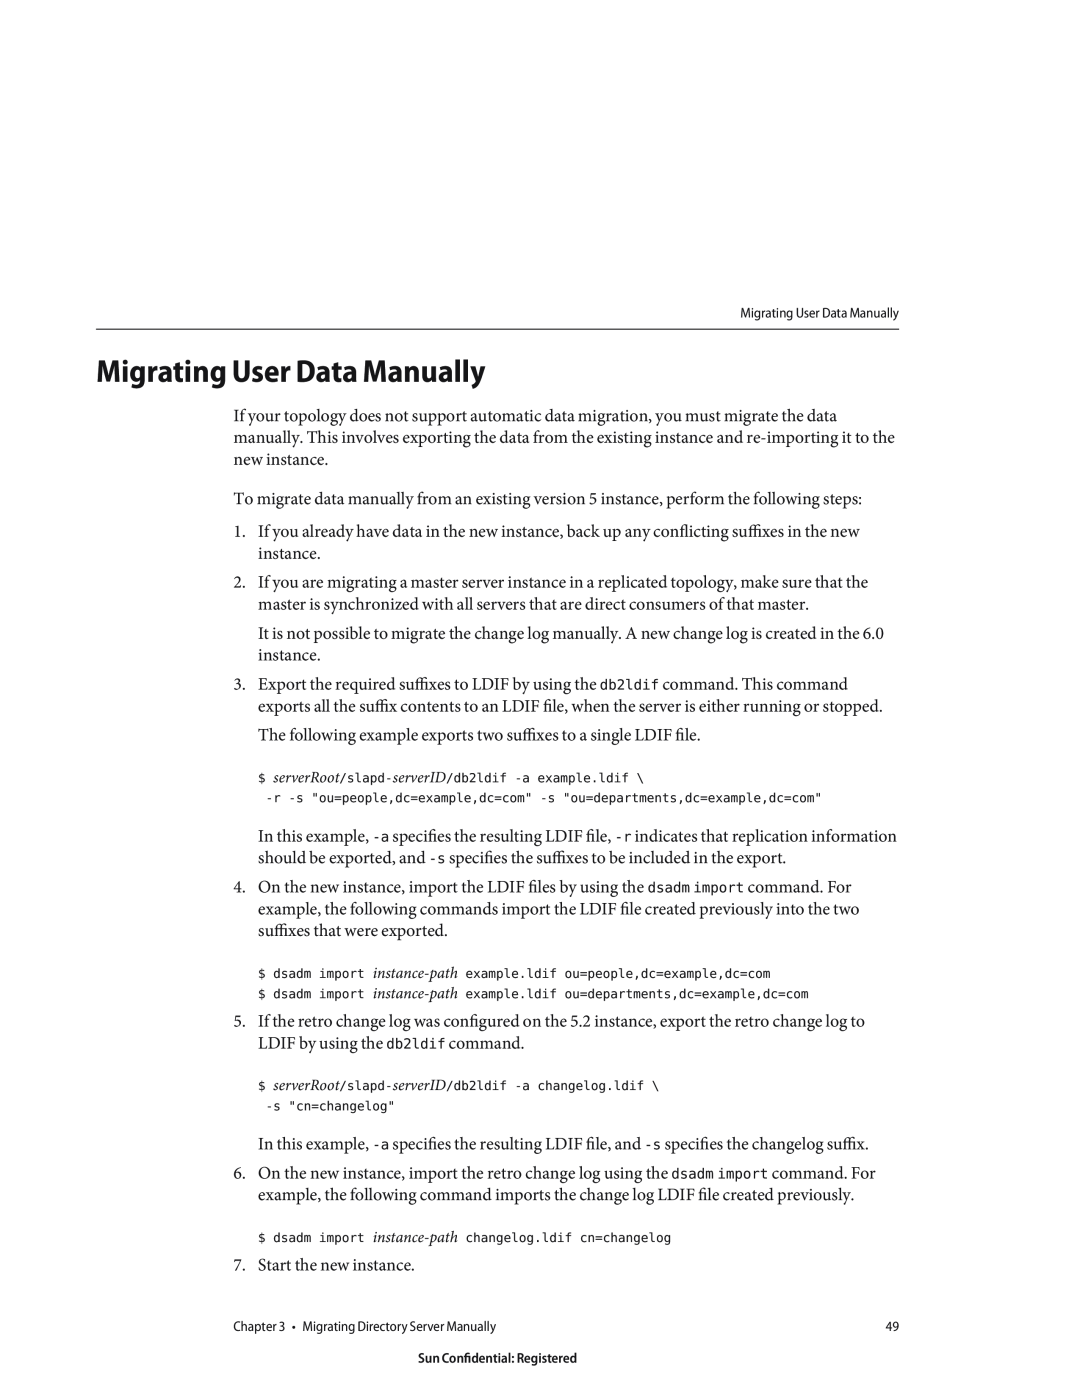 Sun Microsystems 8190994 manual Migrating User Data Manually 